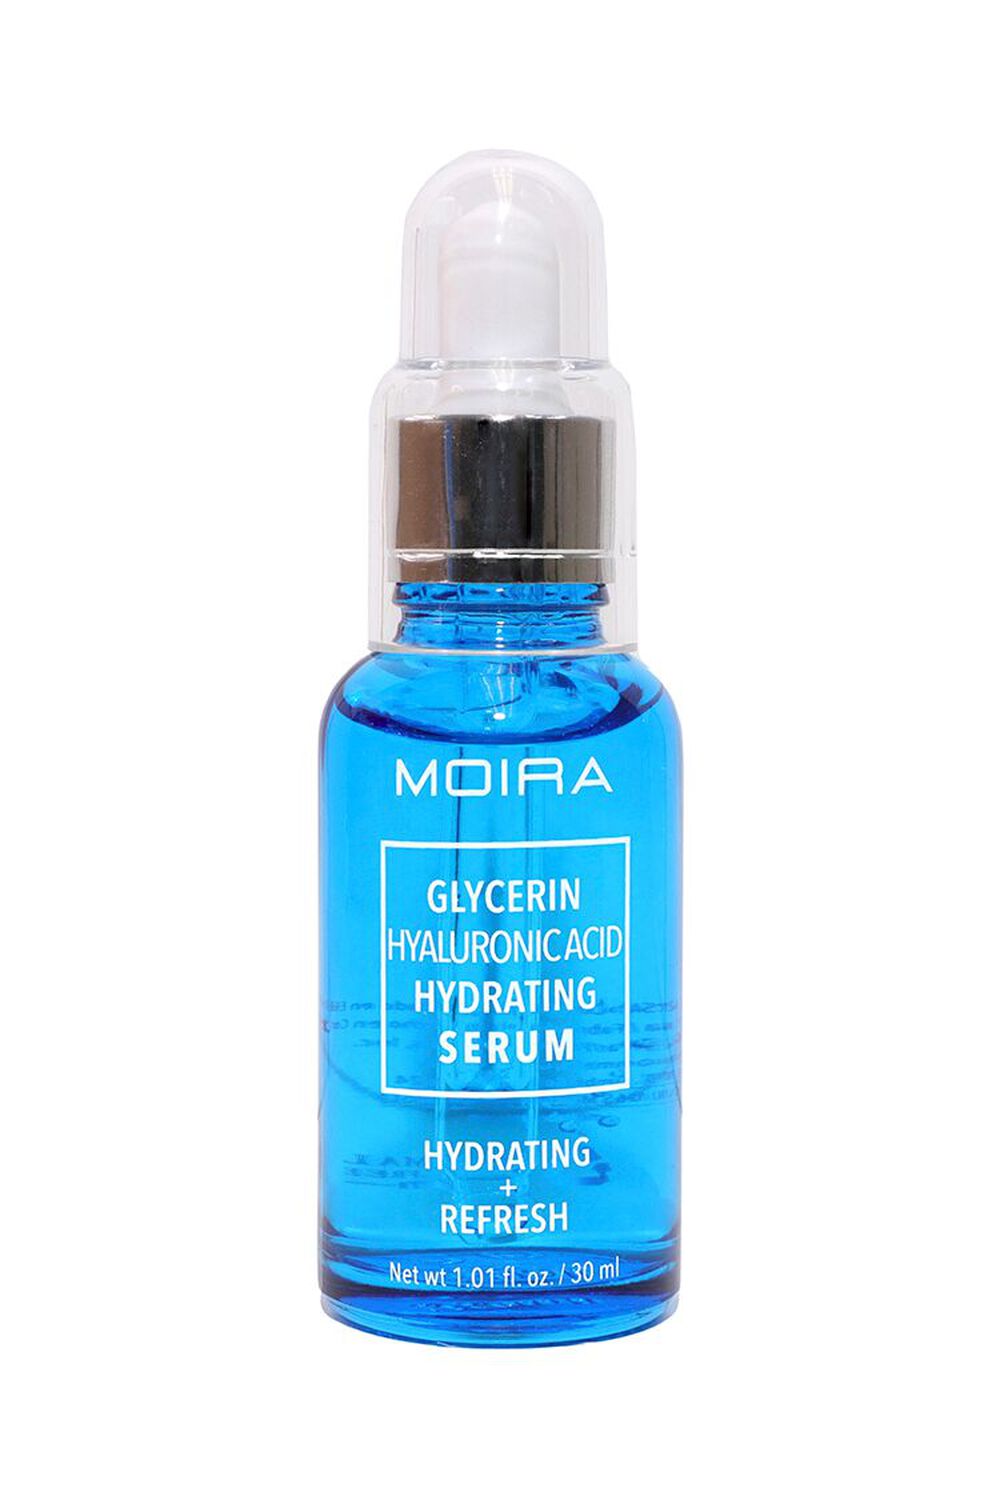 MOIRA Glycerin Hyaluronic Acid Hydrating Serum, image 2